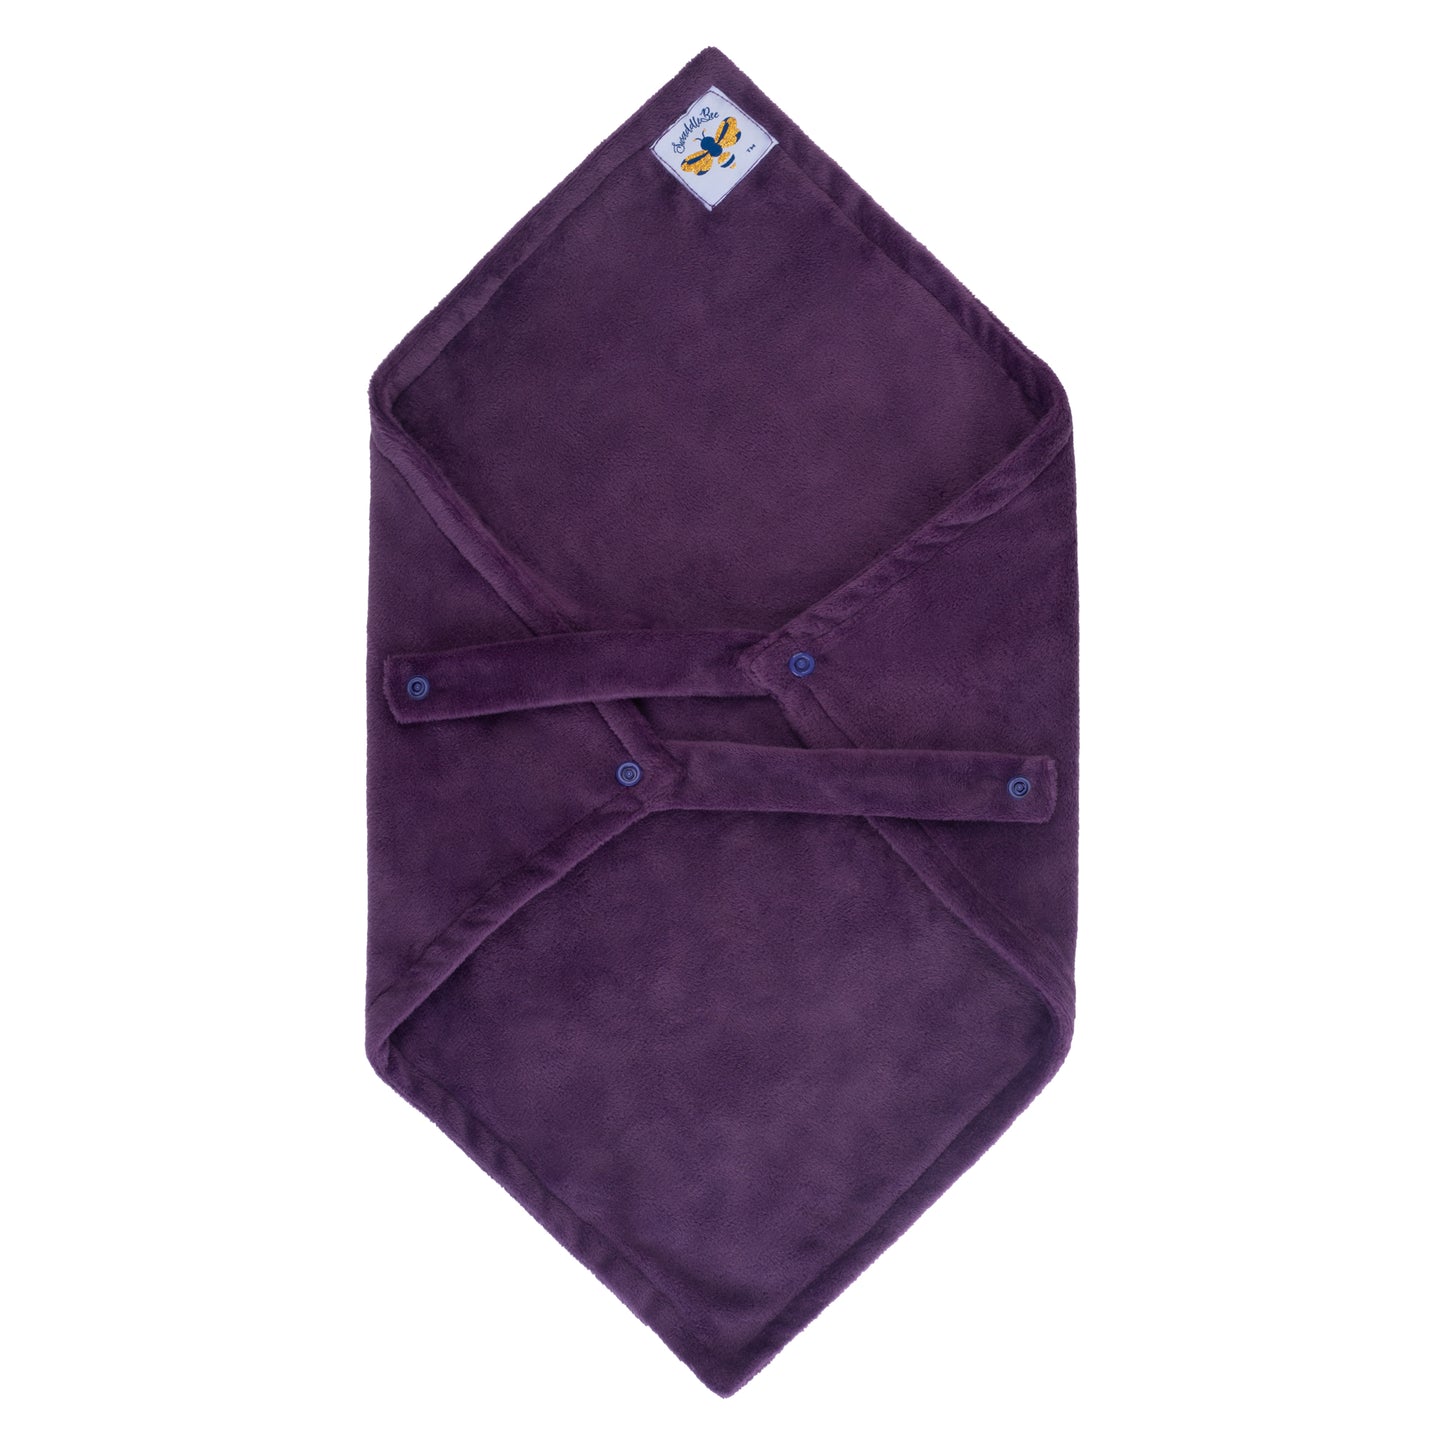 SwaddleBee Jewel Purple LovieBee 2.0 Security Blanket